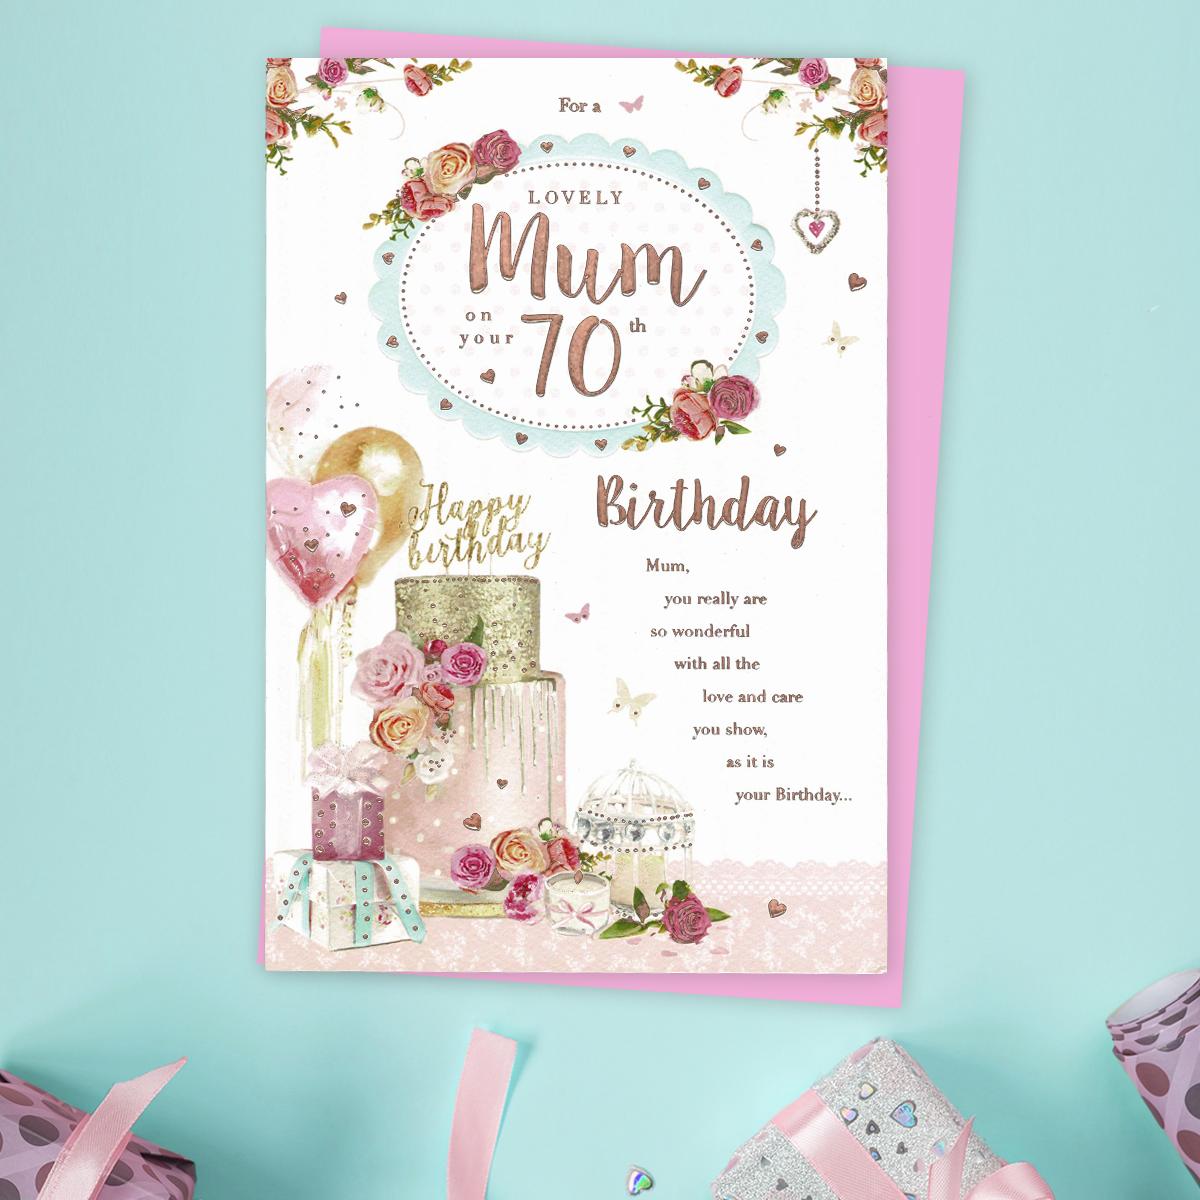 Mum Age 70 Birthday Card Alongside Its Light Pink Envelope